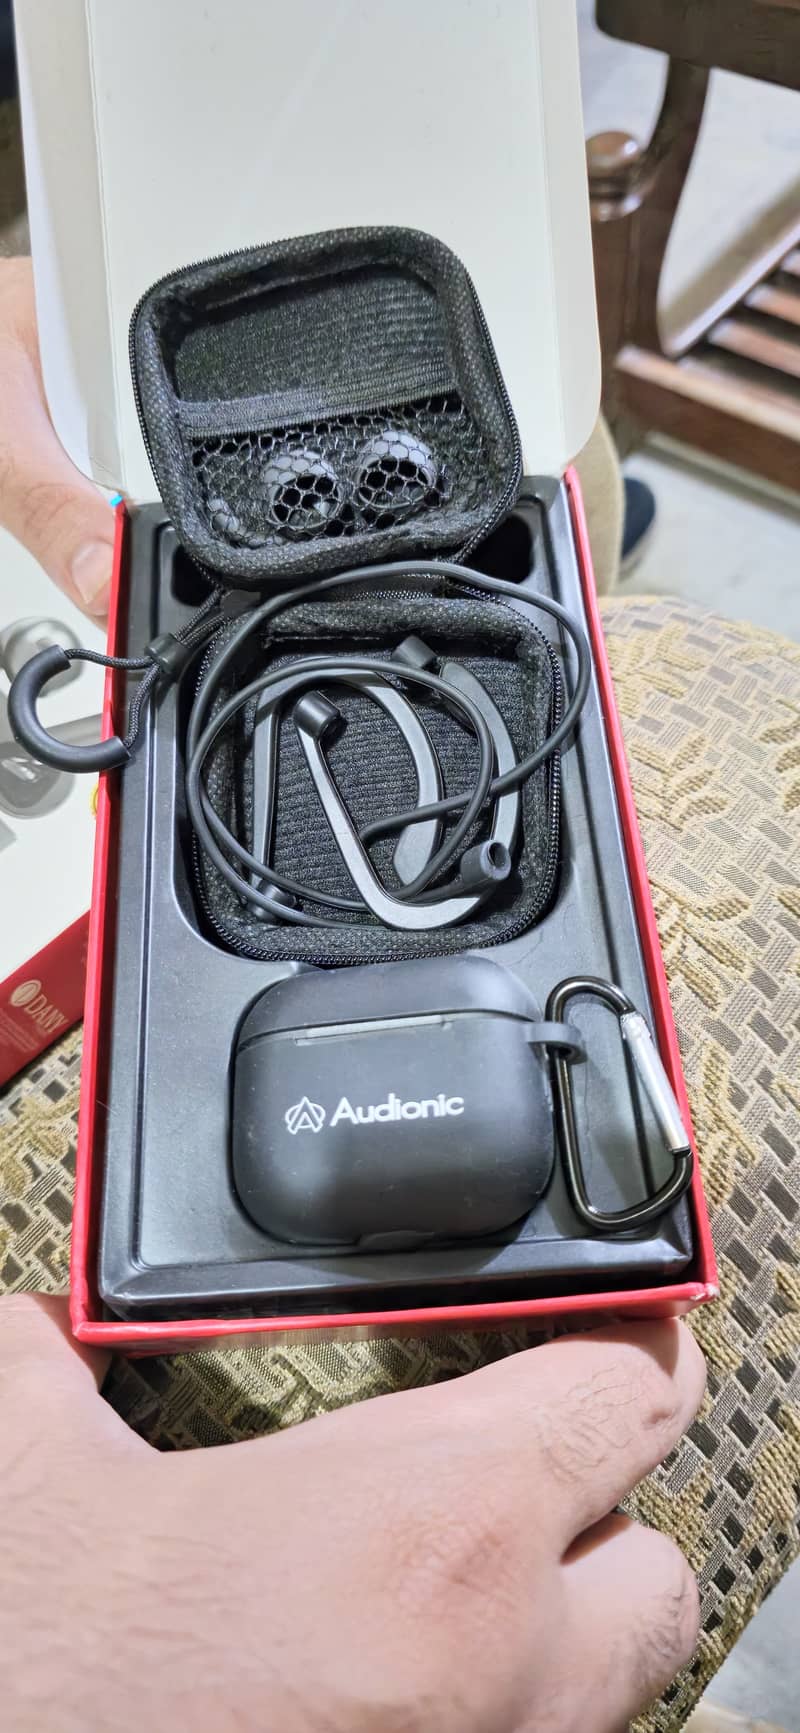 Audionic Airbud 5 Max 2